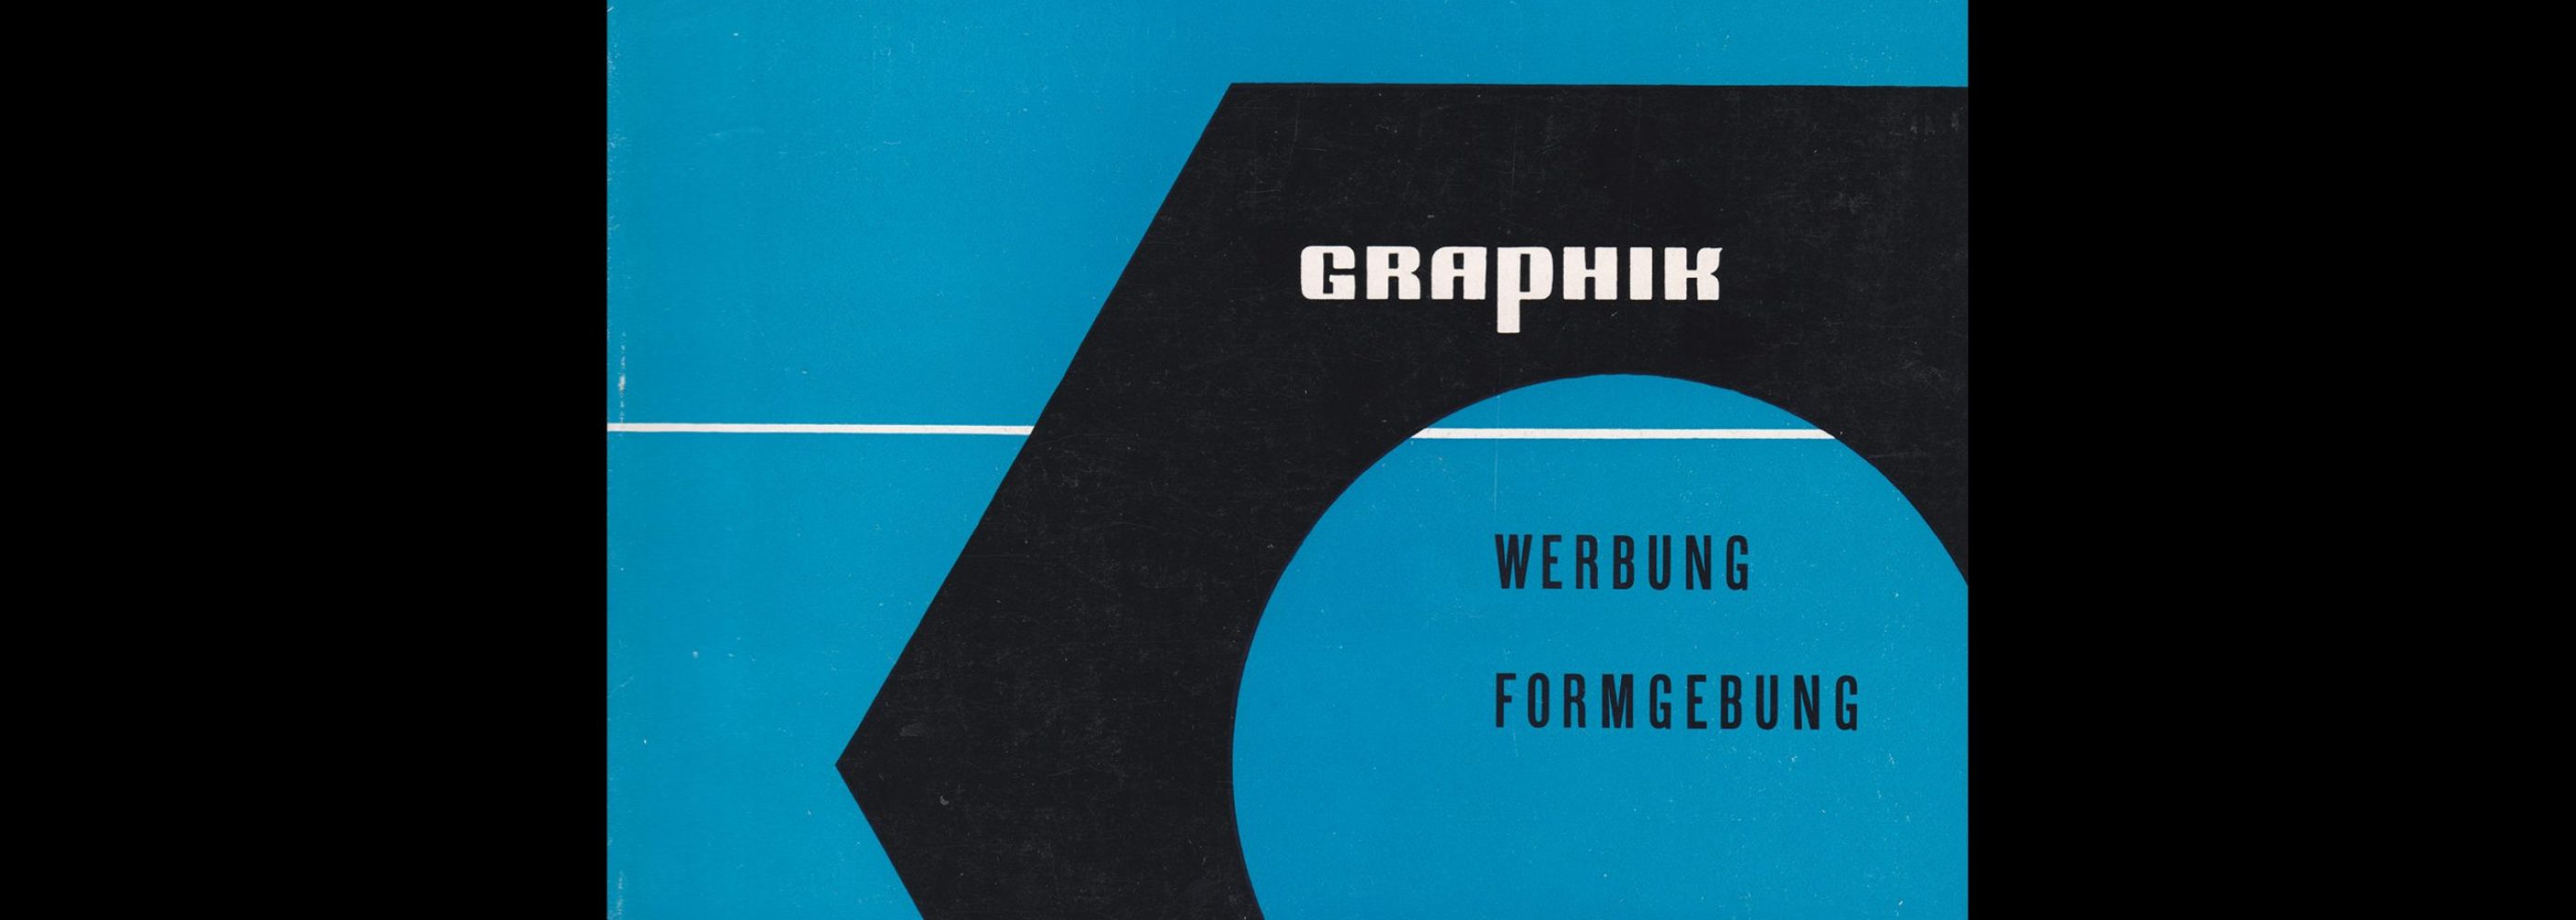 Graphik - Werbung + Formgebung, 10, 1953